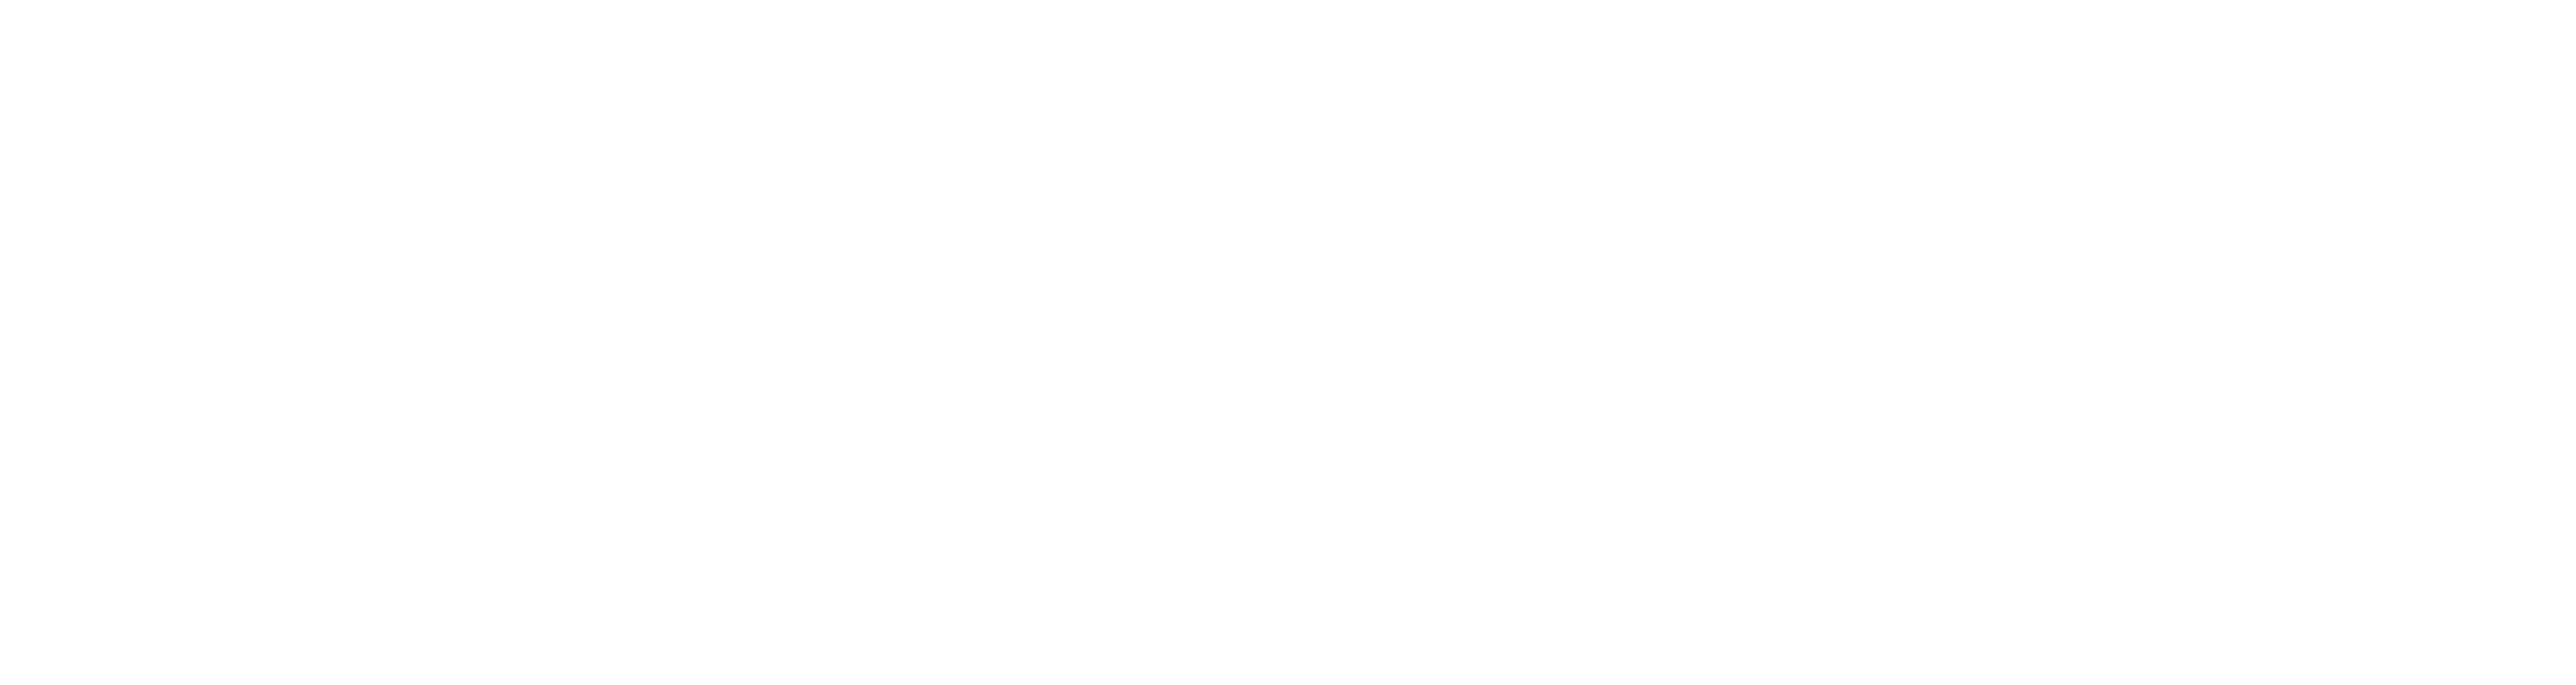 White Sqitch Logo For Dark Backgrounds Illustration